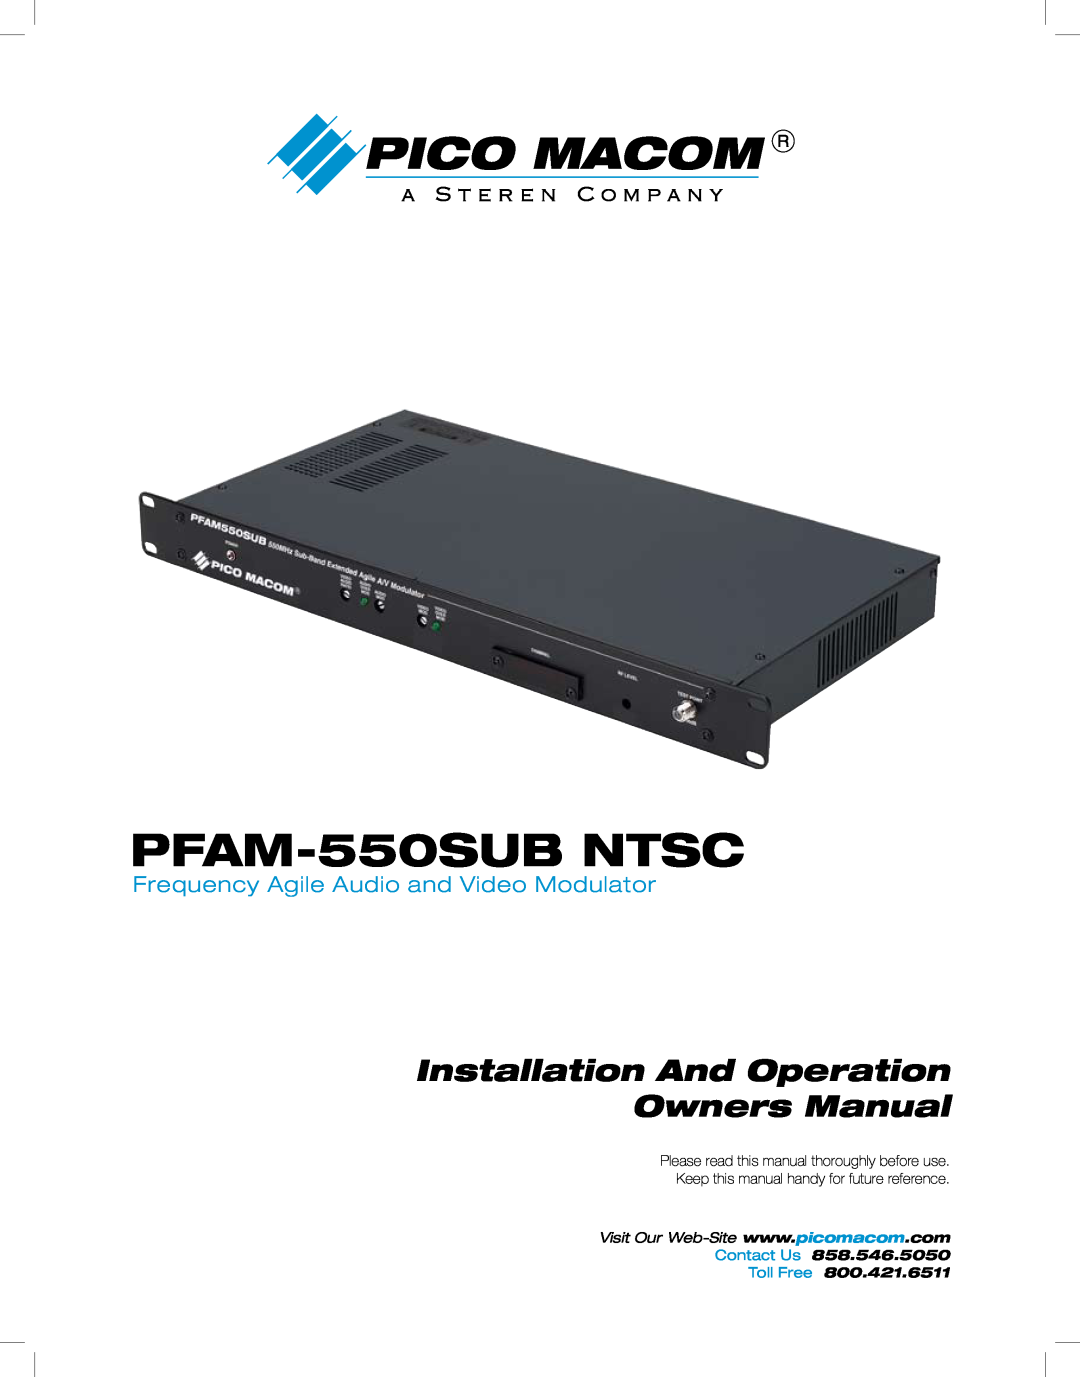 Pico Macom owner manual PFAM-550SUBNTSC, Pico Macom, Frequency Agile Audio and Video Modulator, Contact Us Toll Free 